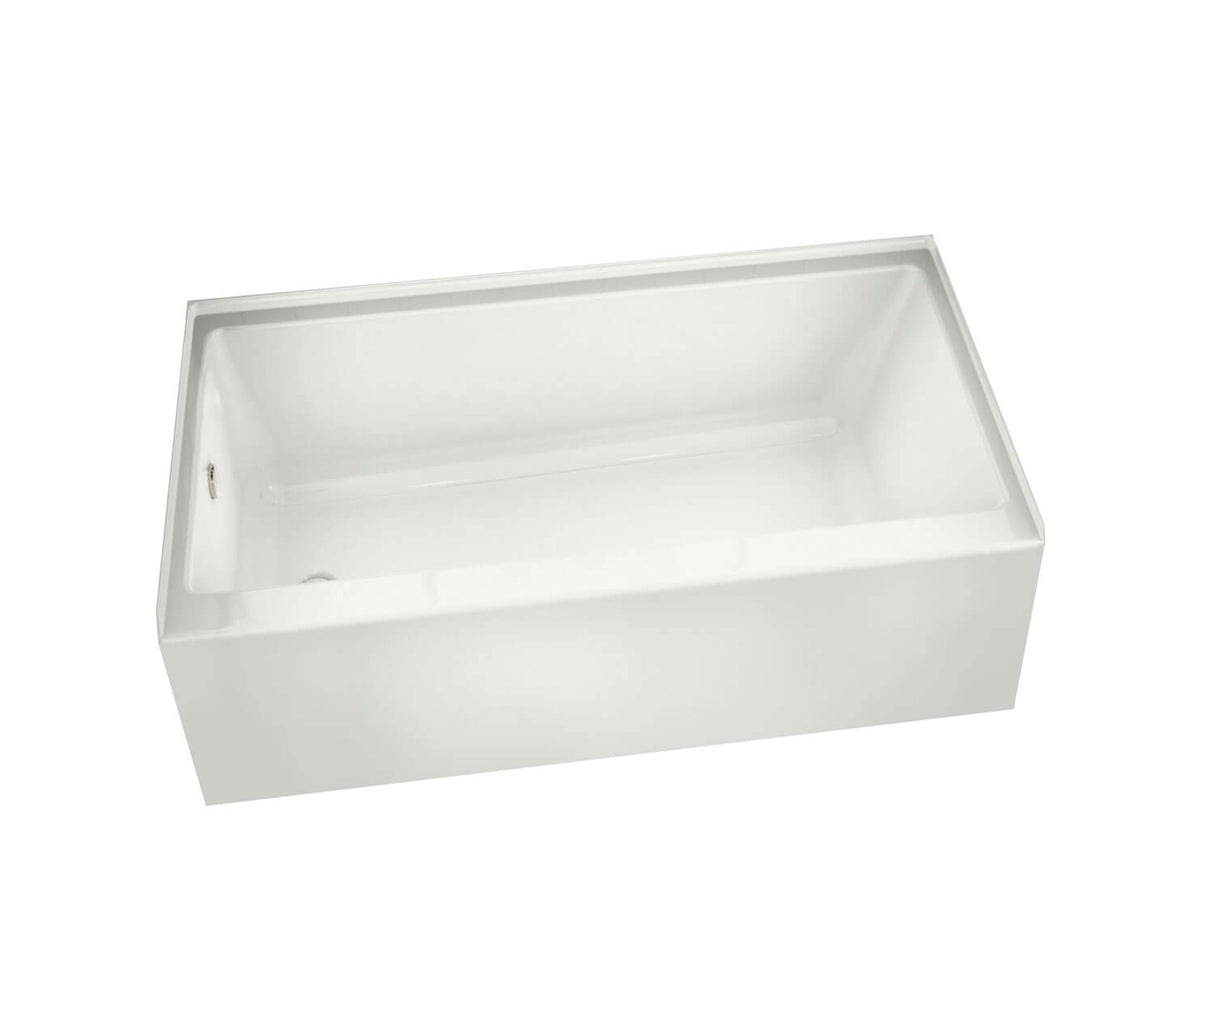 MAAX 105704-000-001-102 Rubix 6032 AFR Acrylic Alcove Right-Hand Drain Bathtub in White